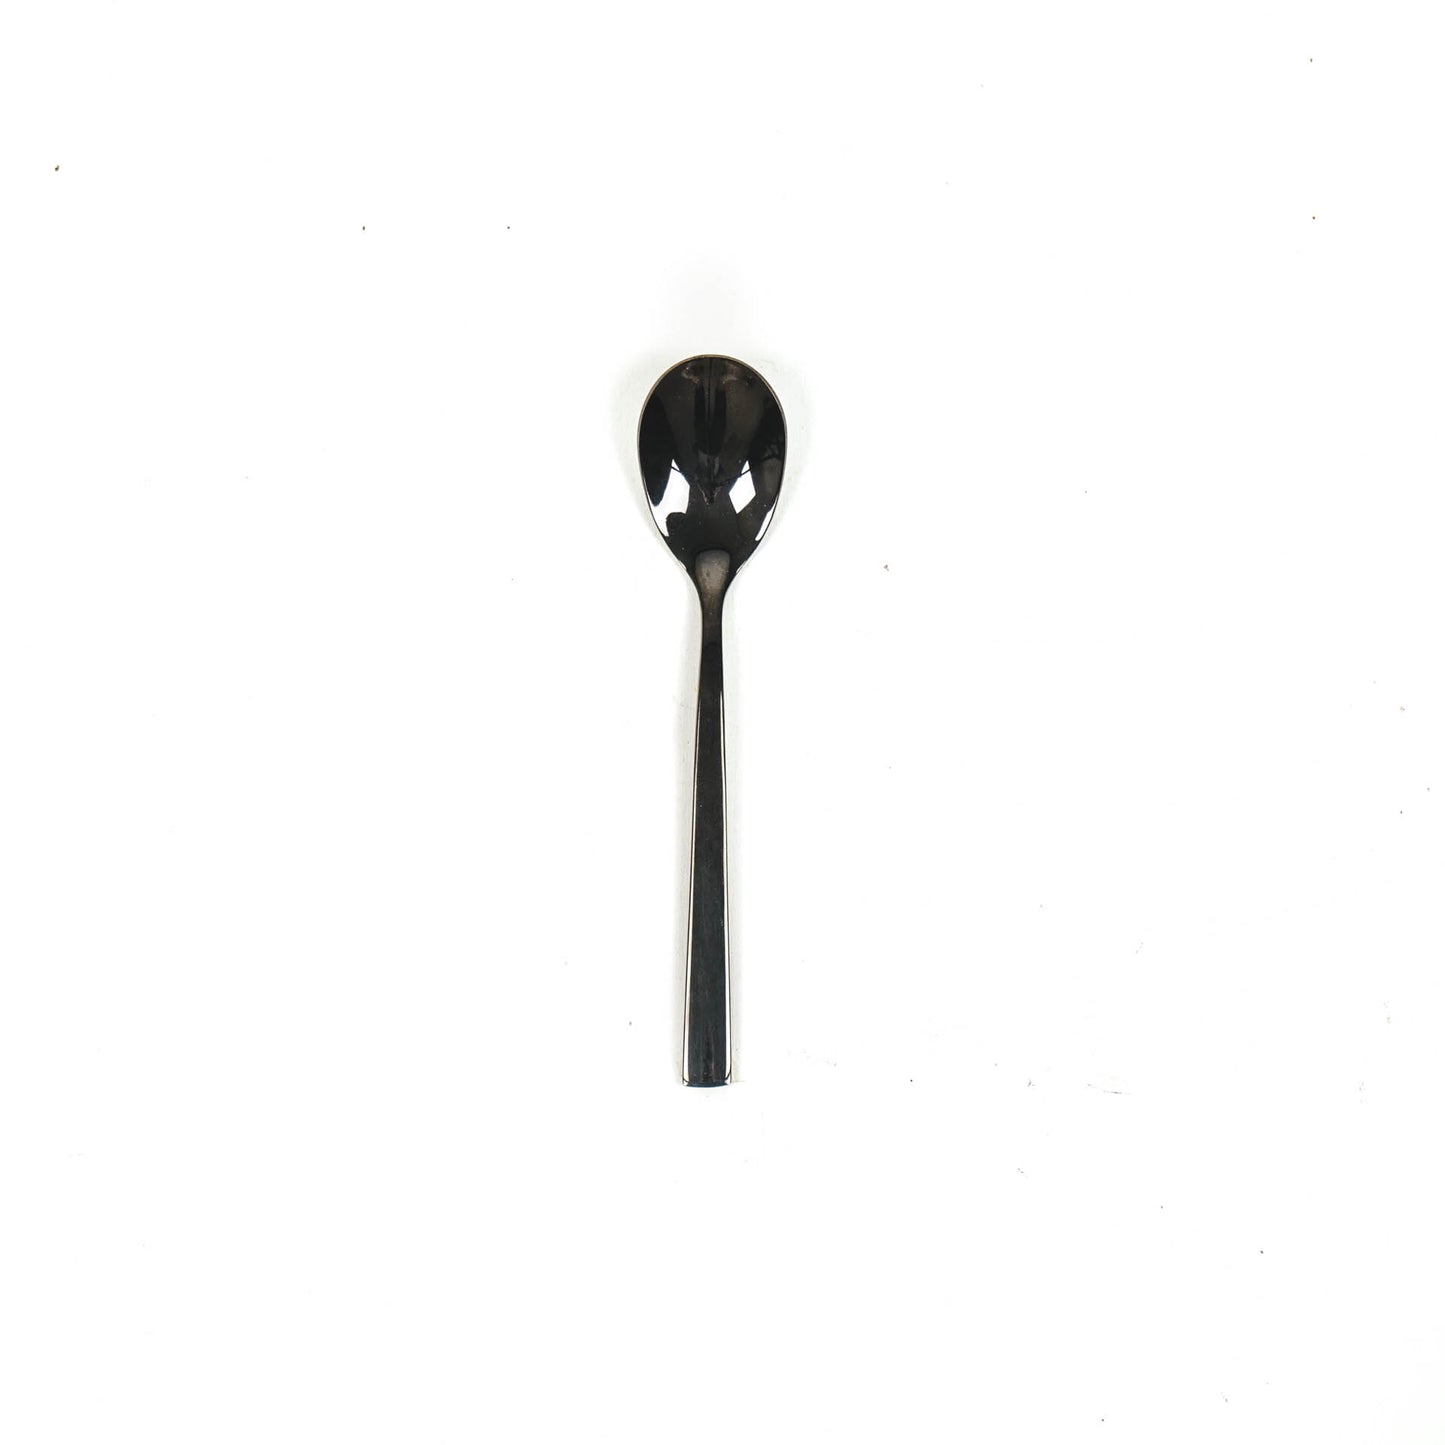 HV Black Teaspoons - 6 pcs - Stainless steel